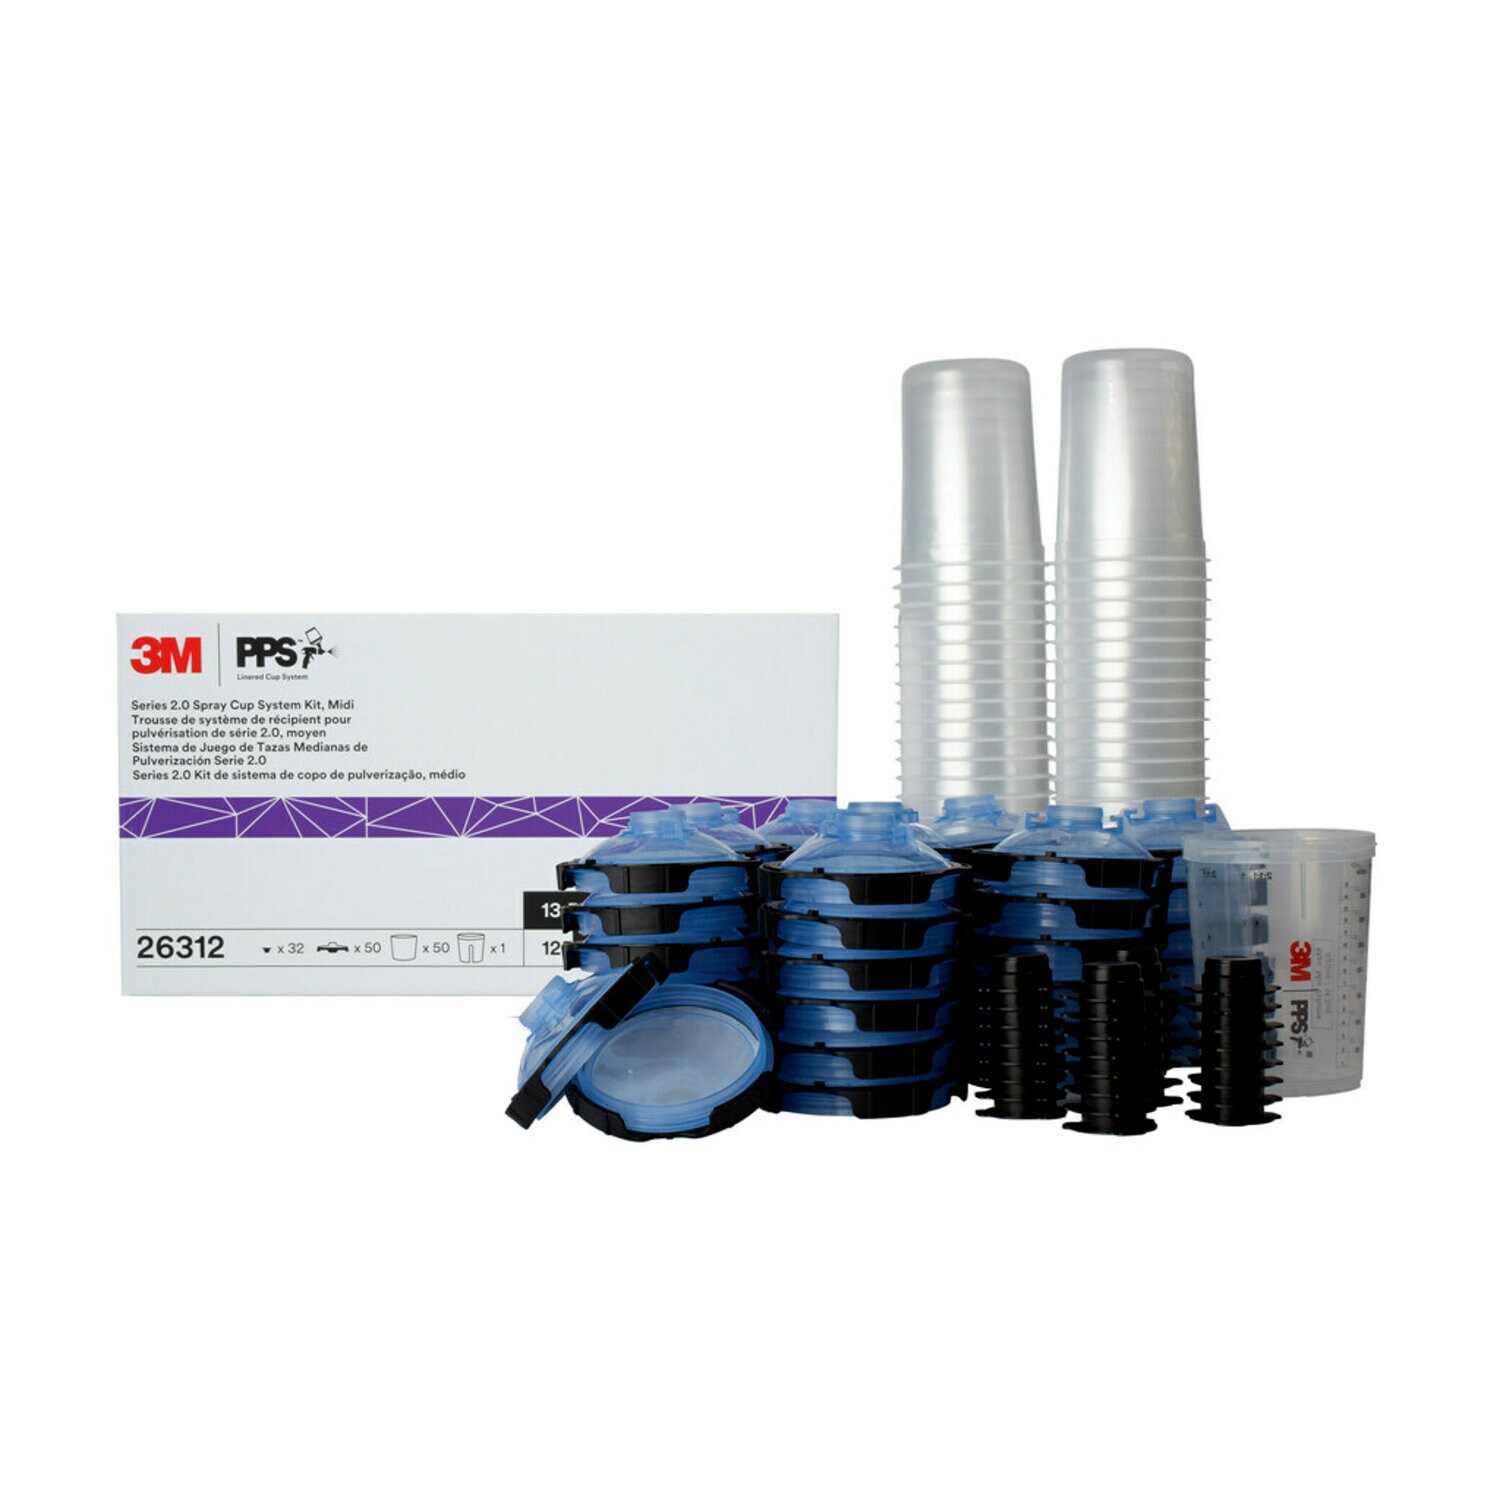 7100284627 - 3M PPS Series 2.0 Spray Cup System Kit 26312, Midi (13.5 oz, 400 mL), 125 Micron Filter, 1 Kit/Case